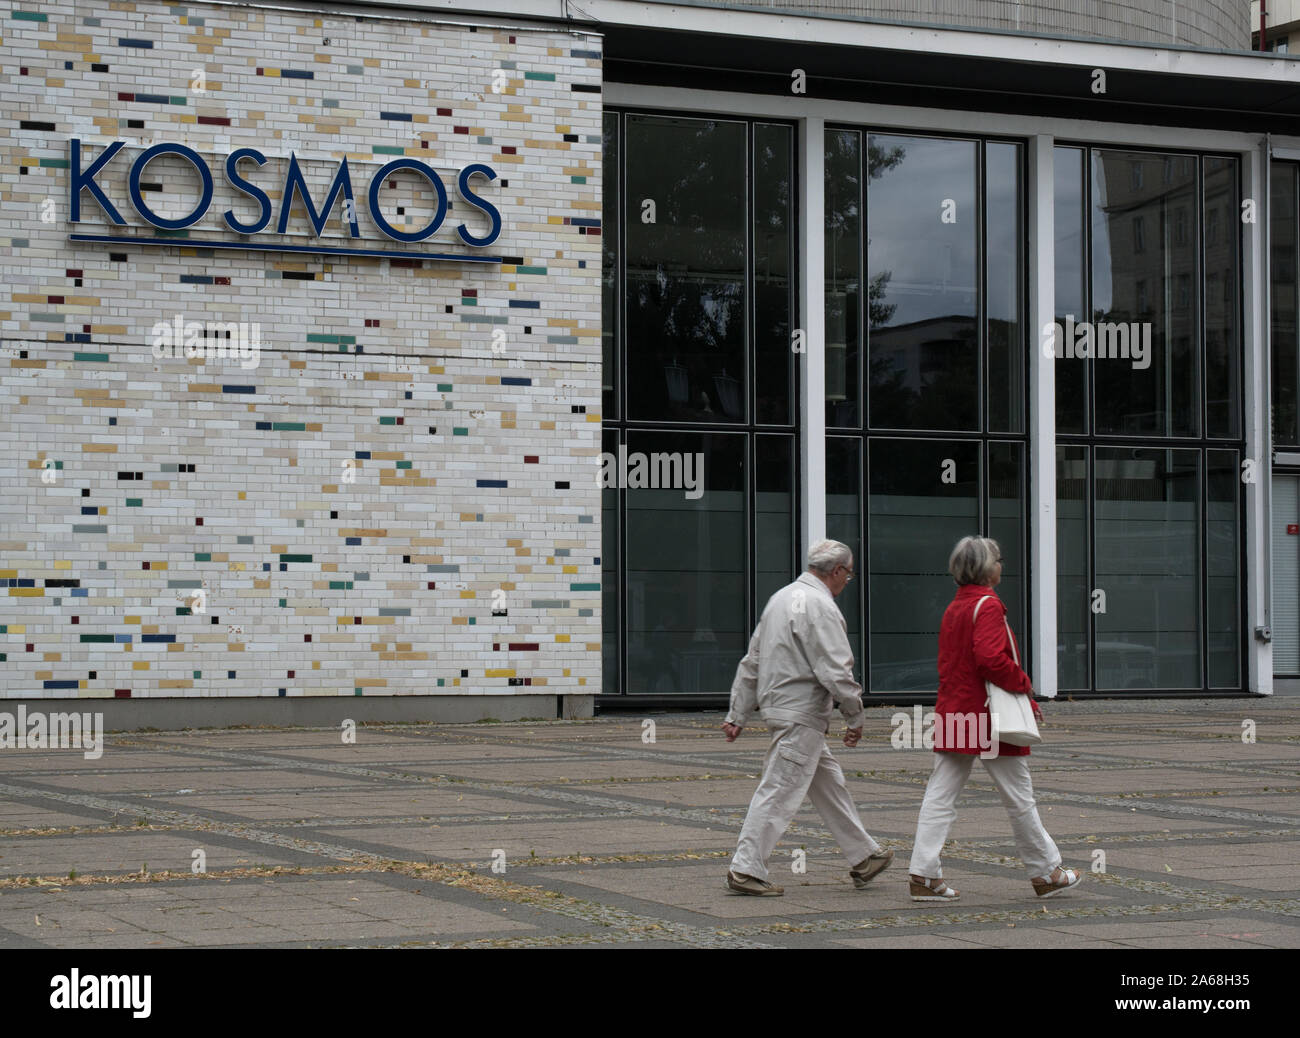 Berlin/Germany - 07/09/2019: Former large cinema Kosmos in Friedrichshain, Berlin, Germany, front view Stock Photo